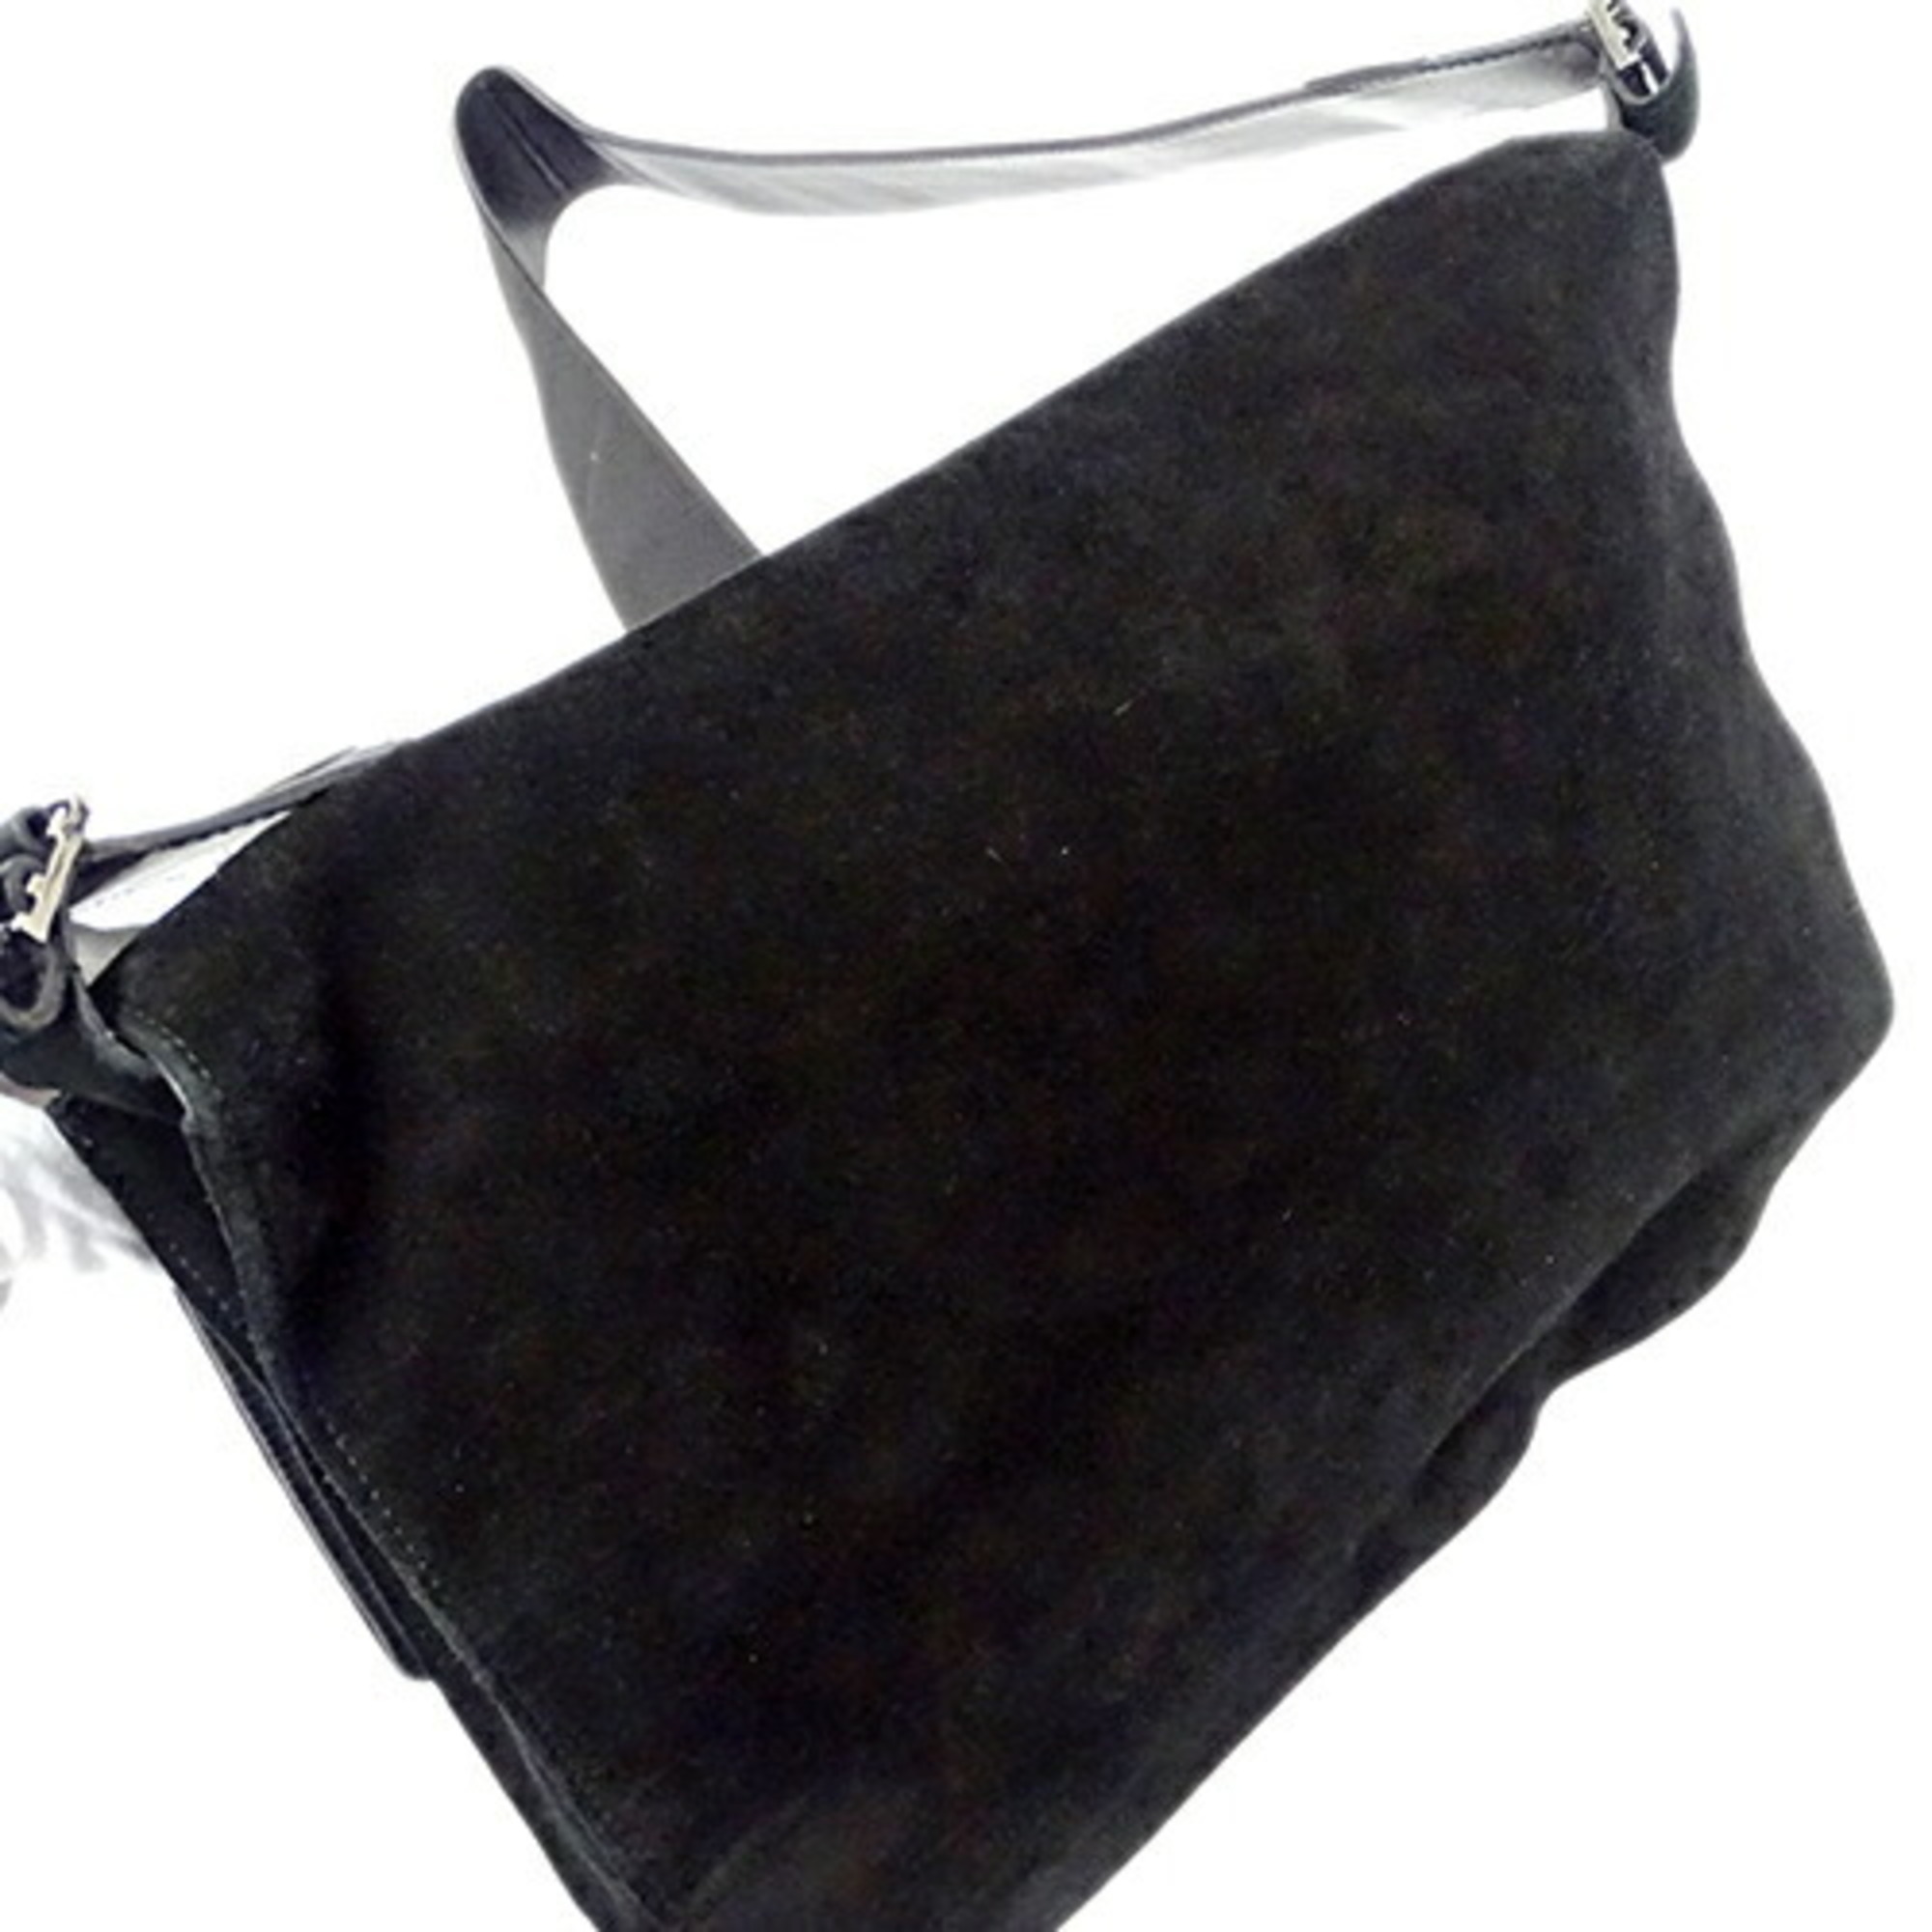 GUCCI Bag Women's Brand Shoulder Suede Black 001 3266 Messenger Crossbody